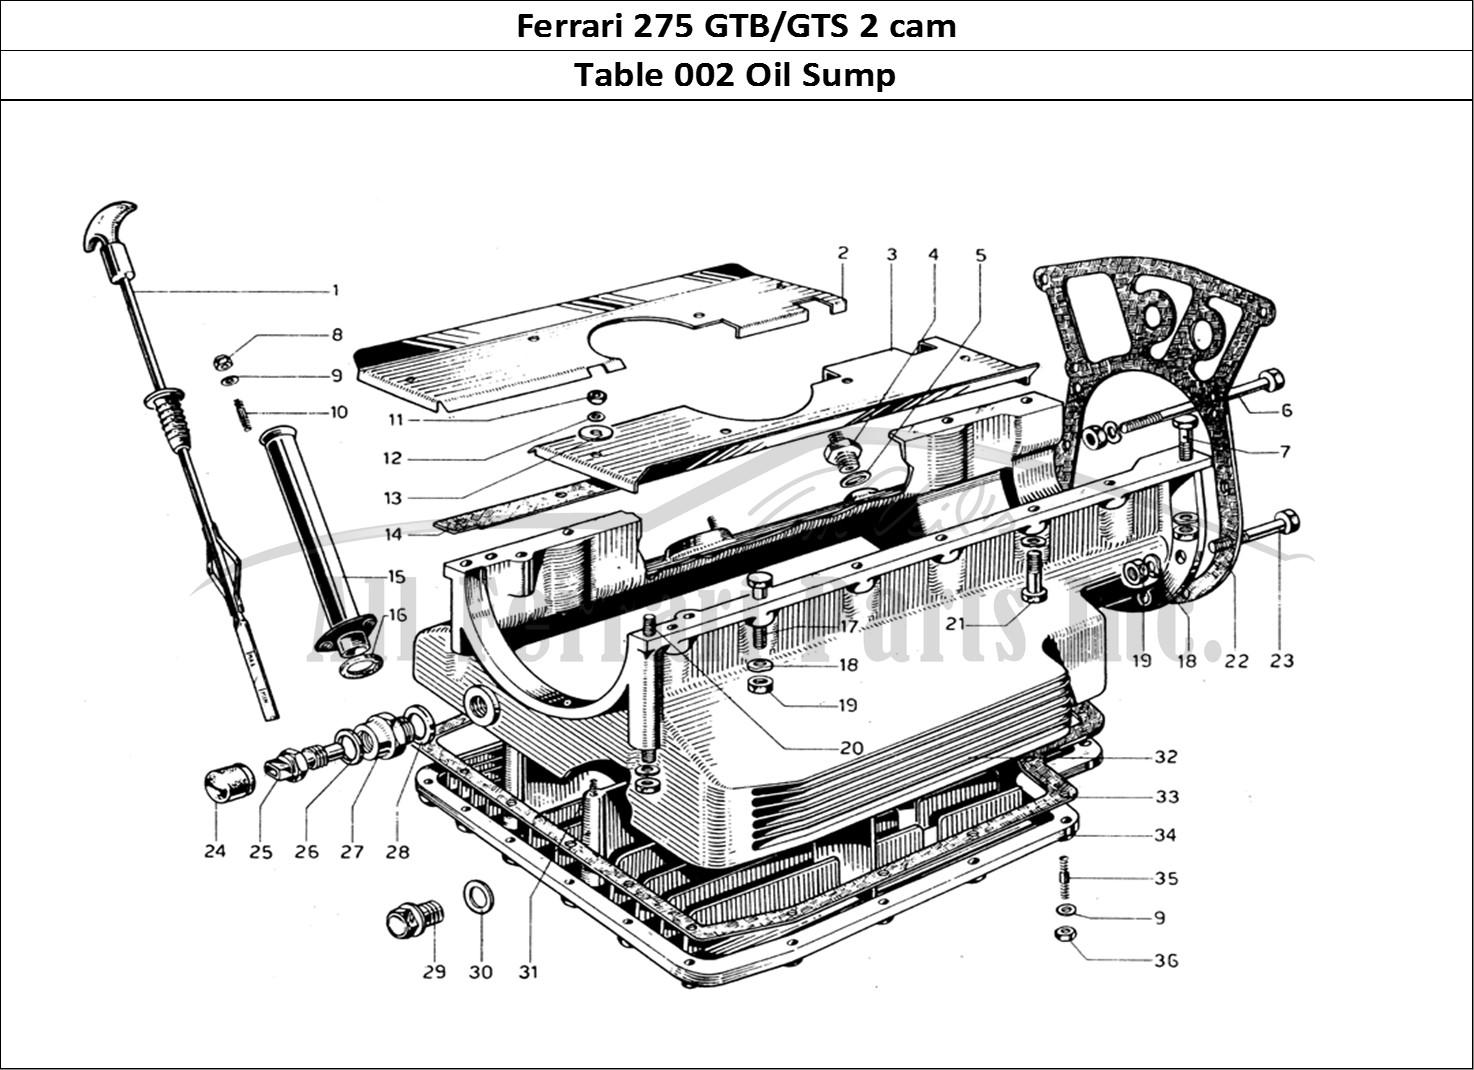 Ferrari Parts Ferrari 275 GTB/GTS 2 cam Page 002 Oil sump